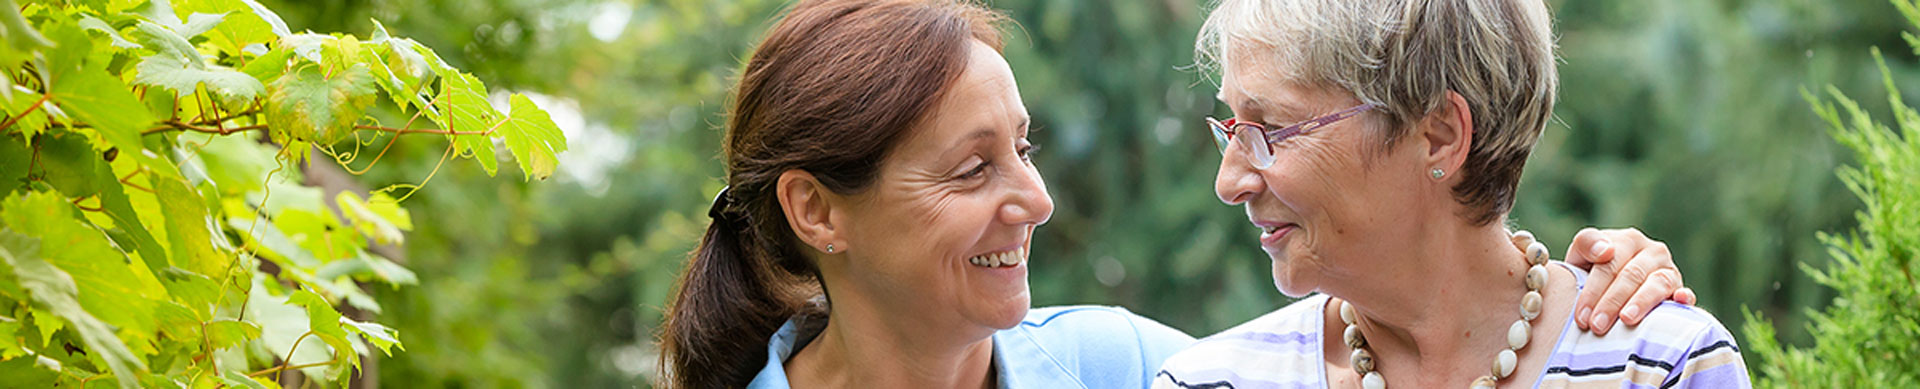 Senior woman and caregiver smiling together